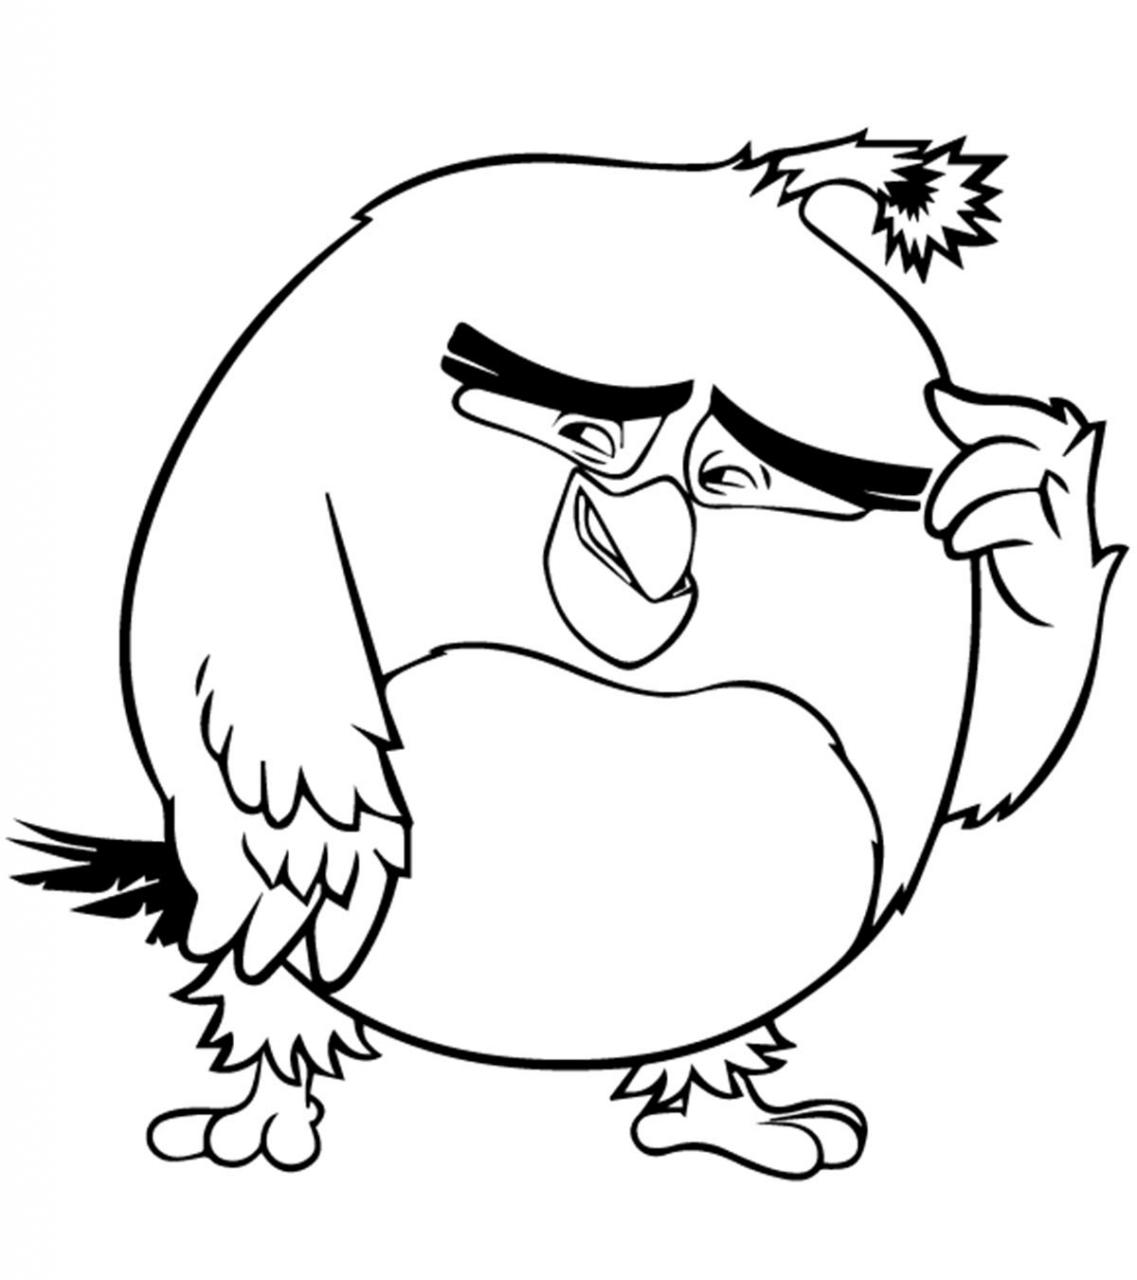 50 buc tranh to mau angry birds dep nhat cho be 1 - 50+ bức tranh tô màu Angry Birds đẹp nhất cho bé